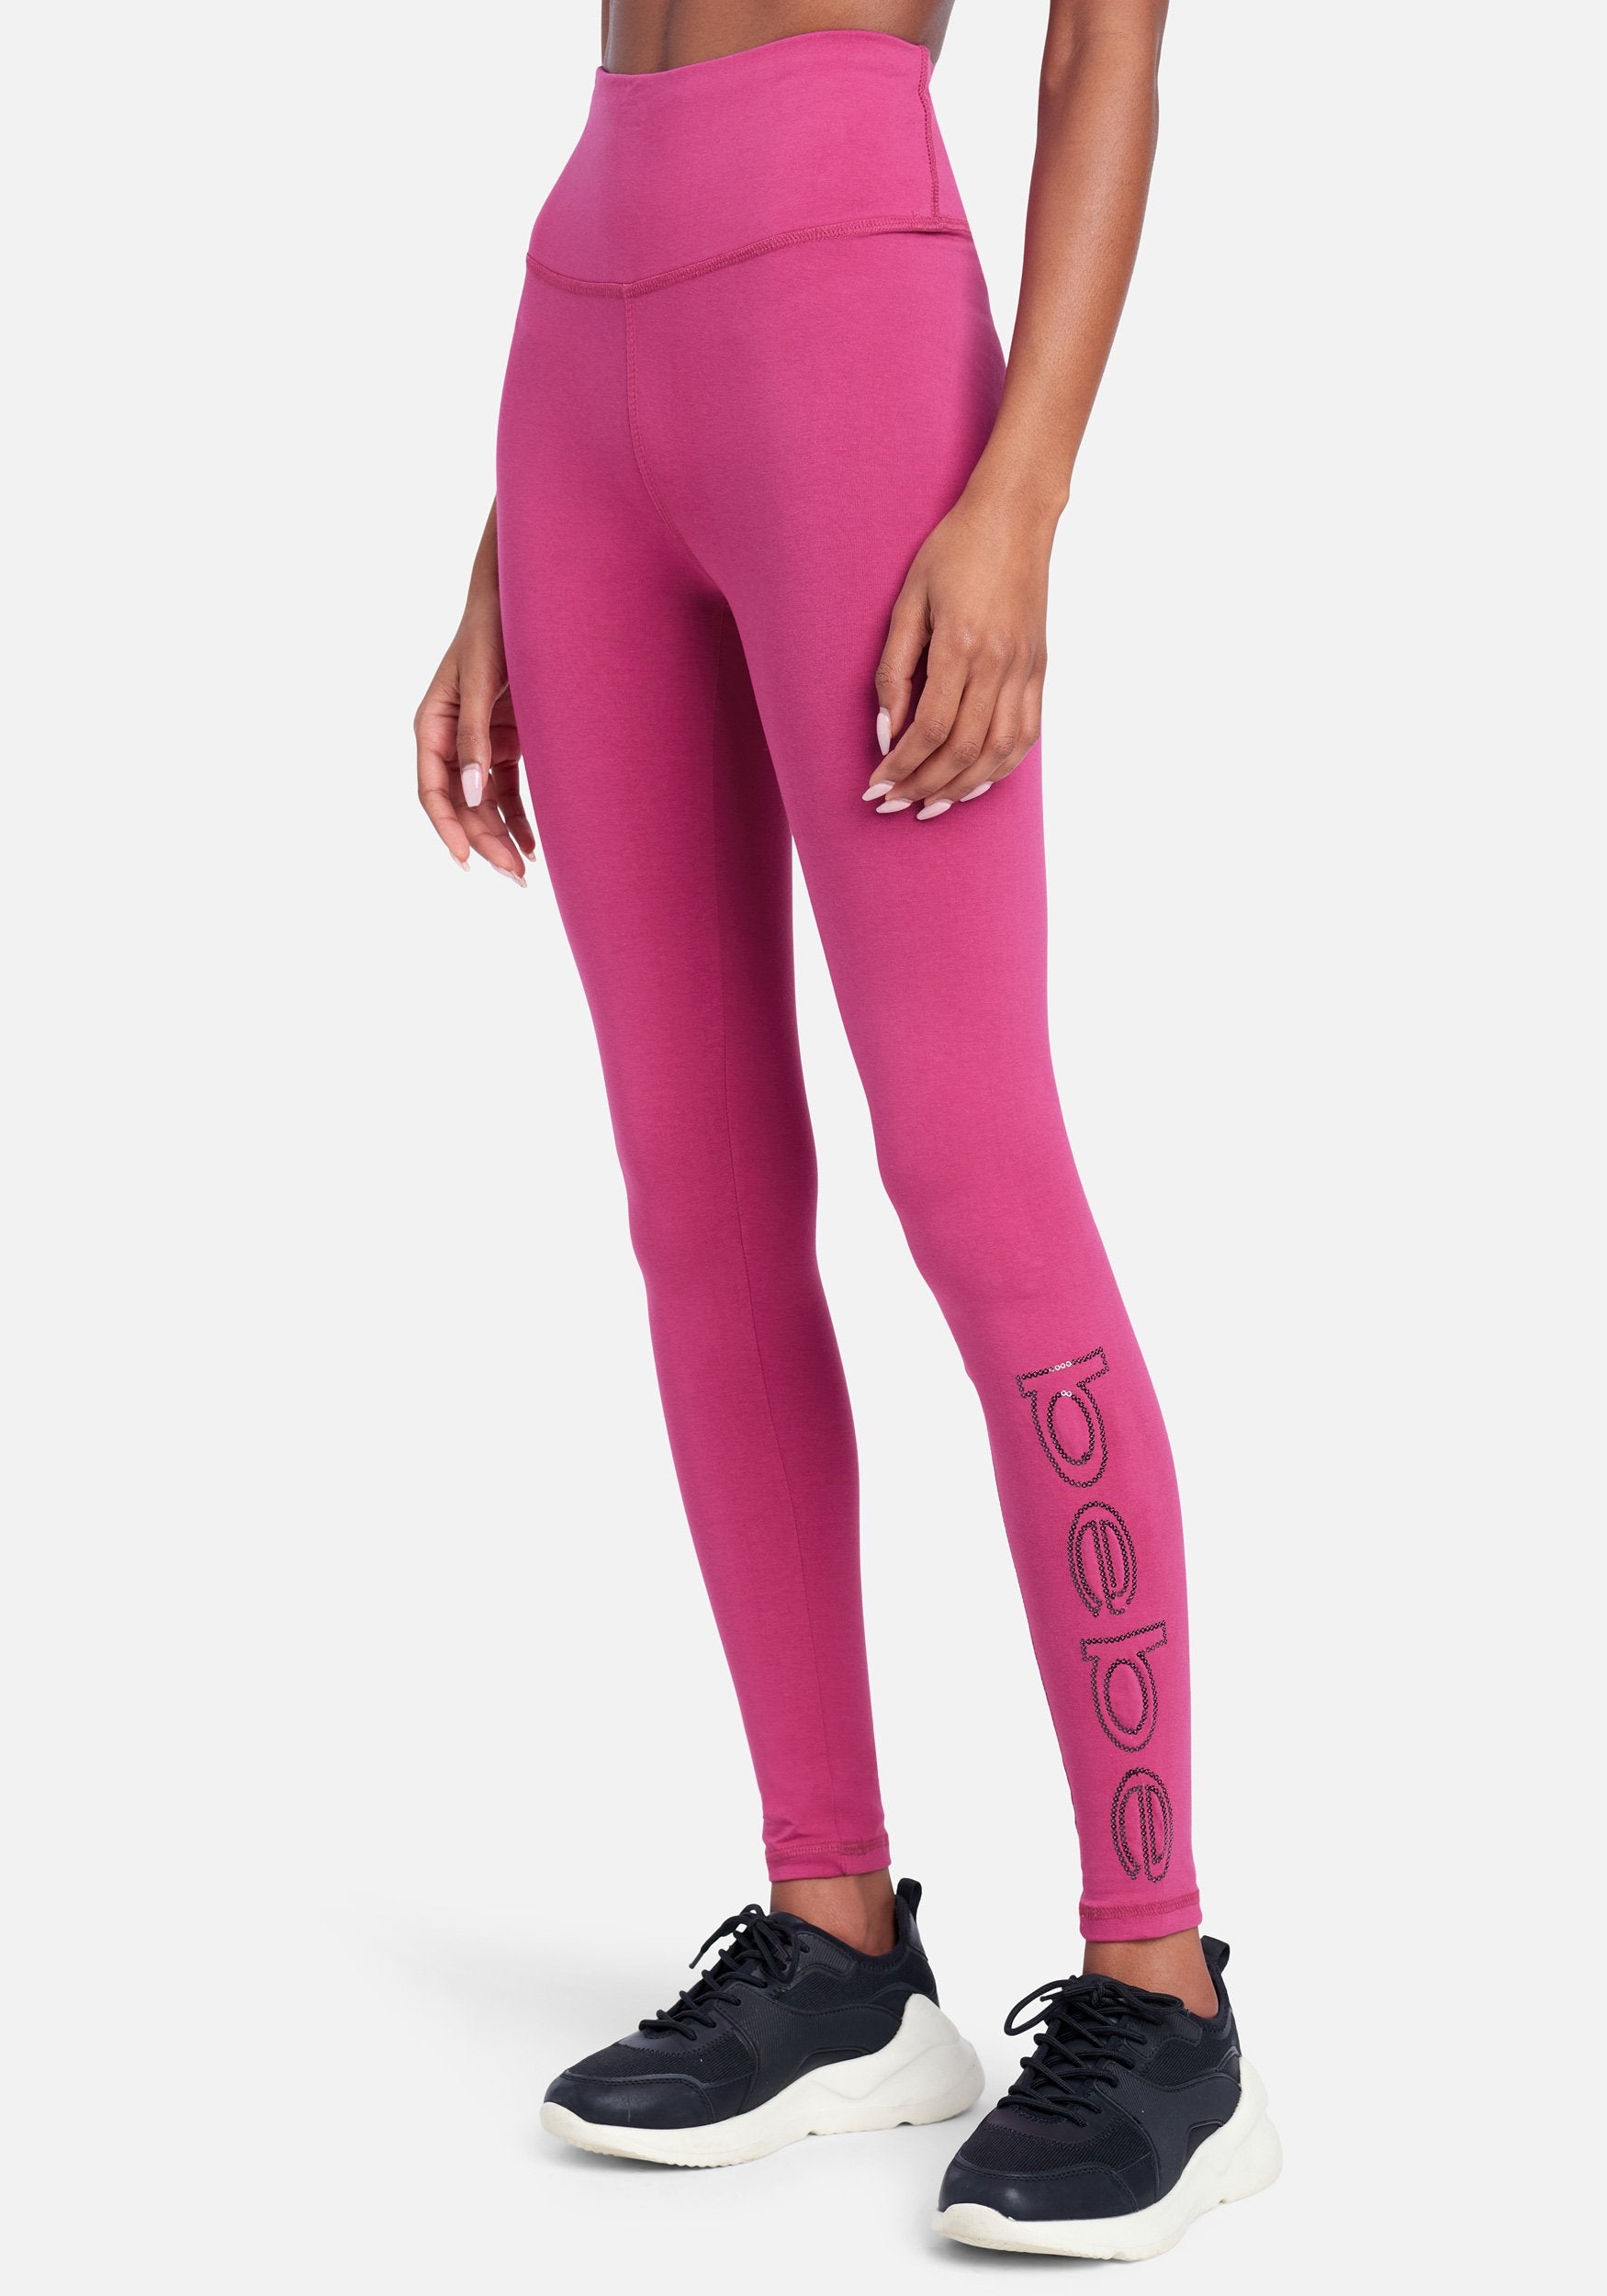 FILA sport rainbow capri leggings size XL - $21 - From Nifty